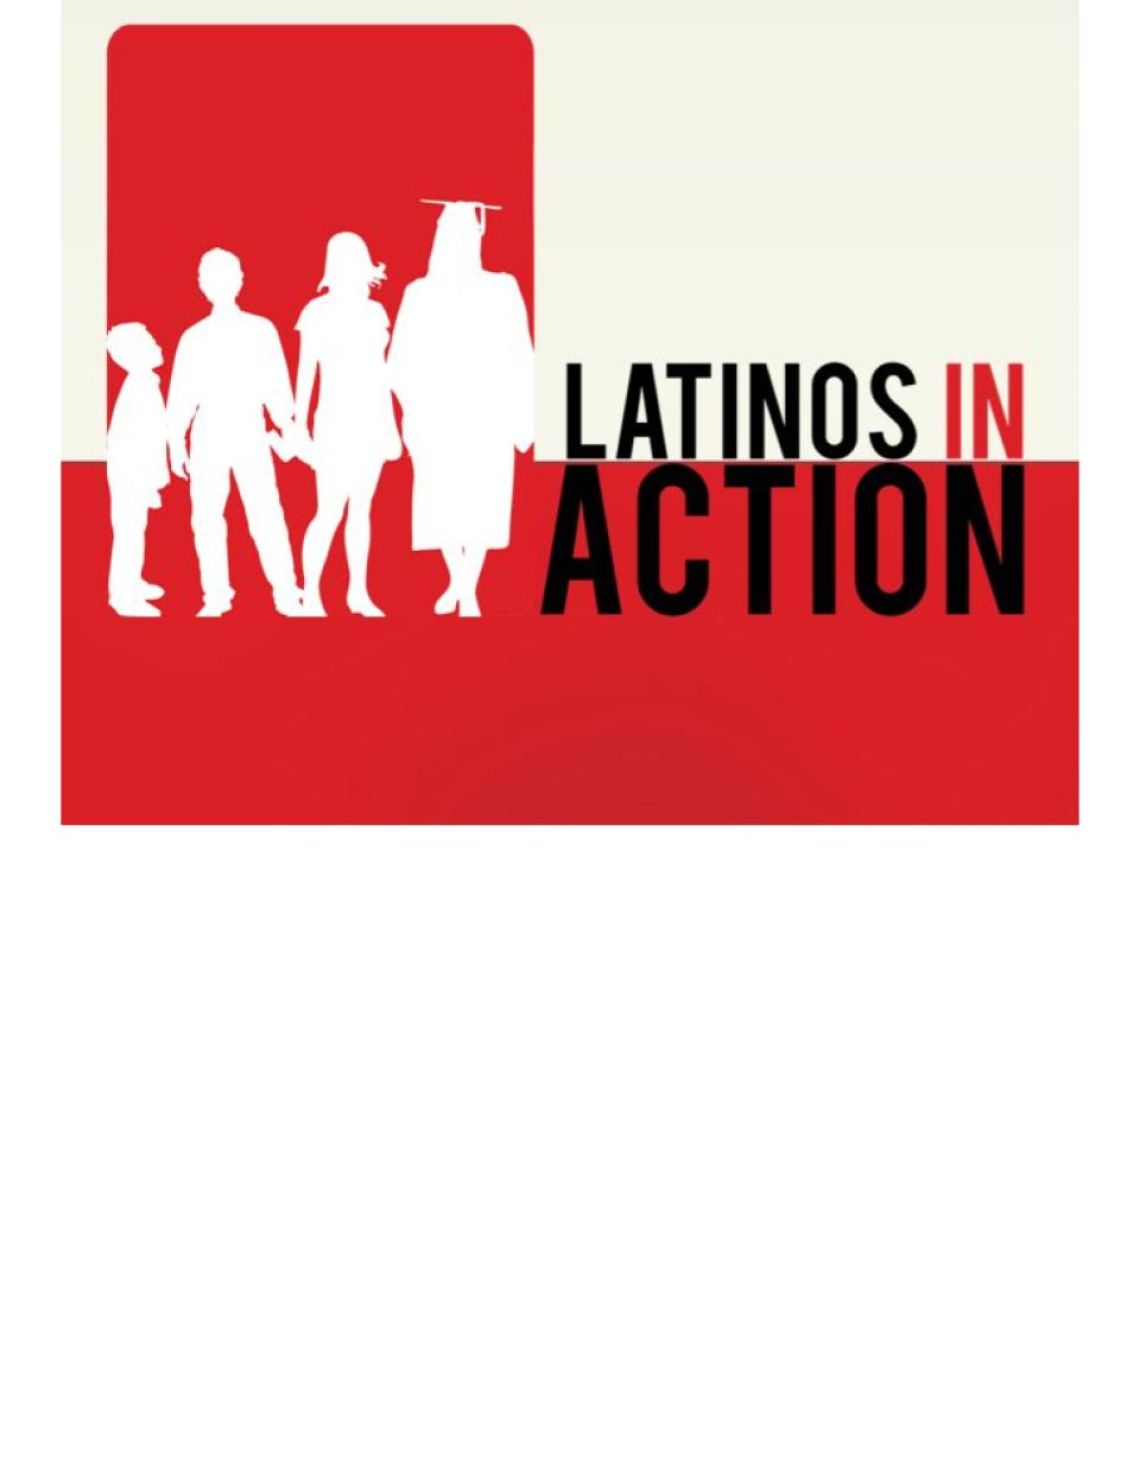 Latinos in Action logo